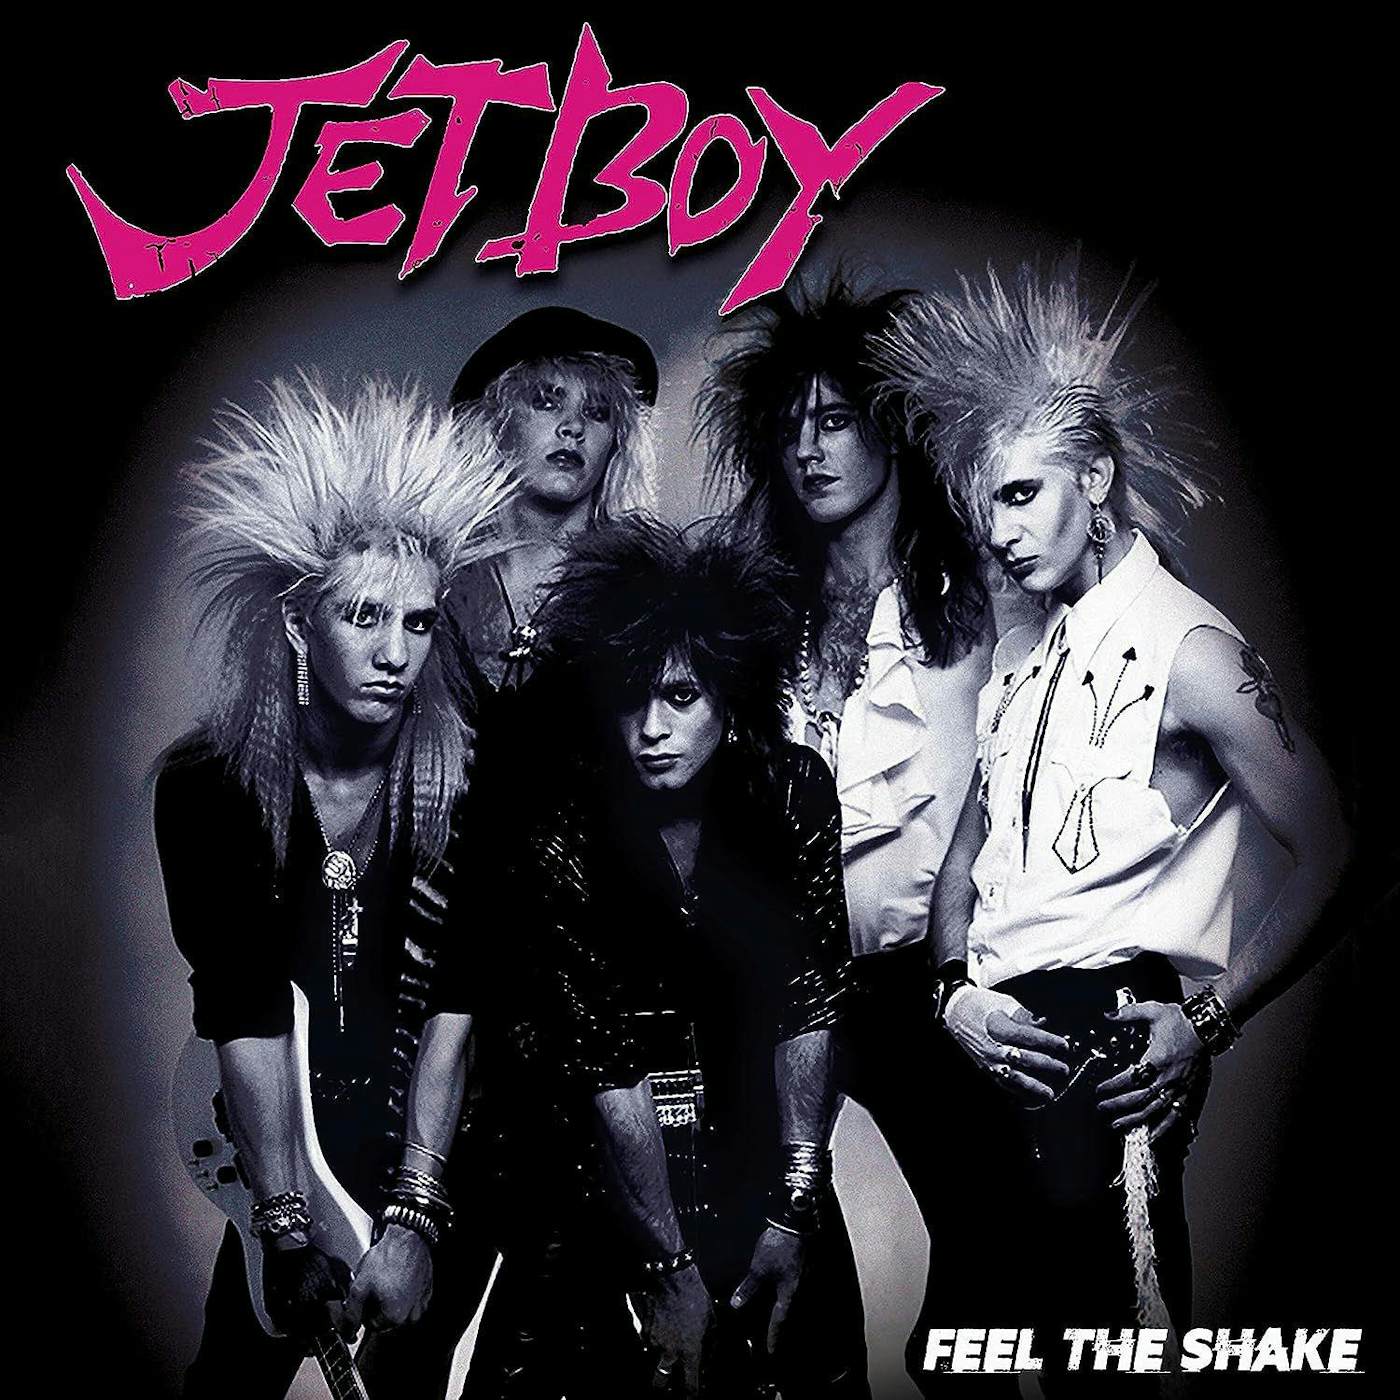 Jetboy Feel The Shake (Pink/Black Splatter) Vinyl Record